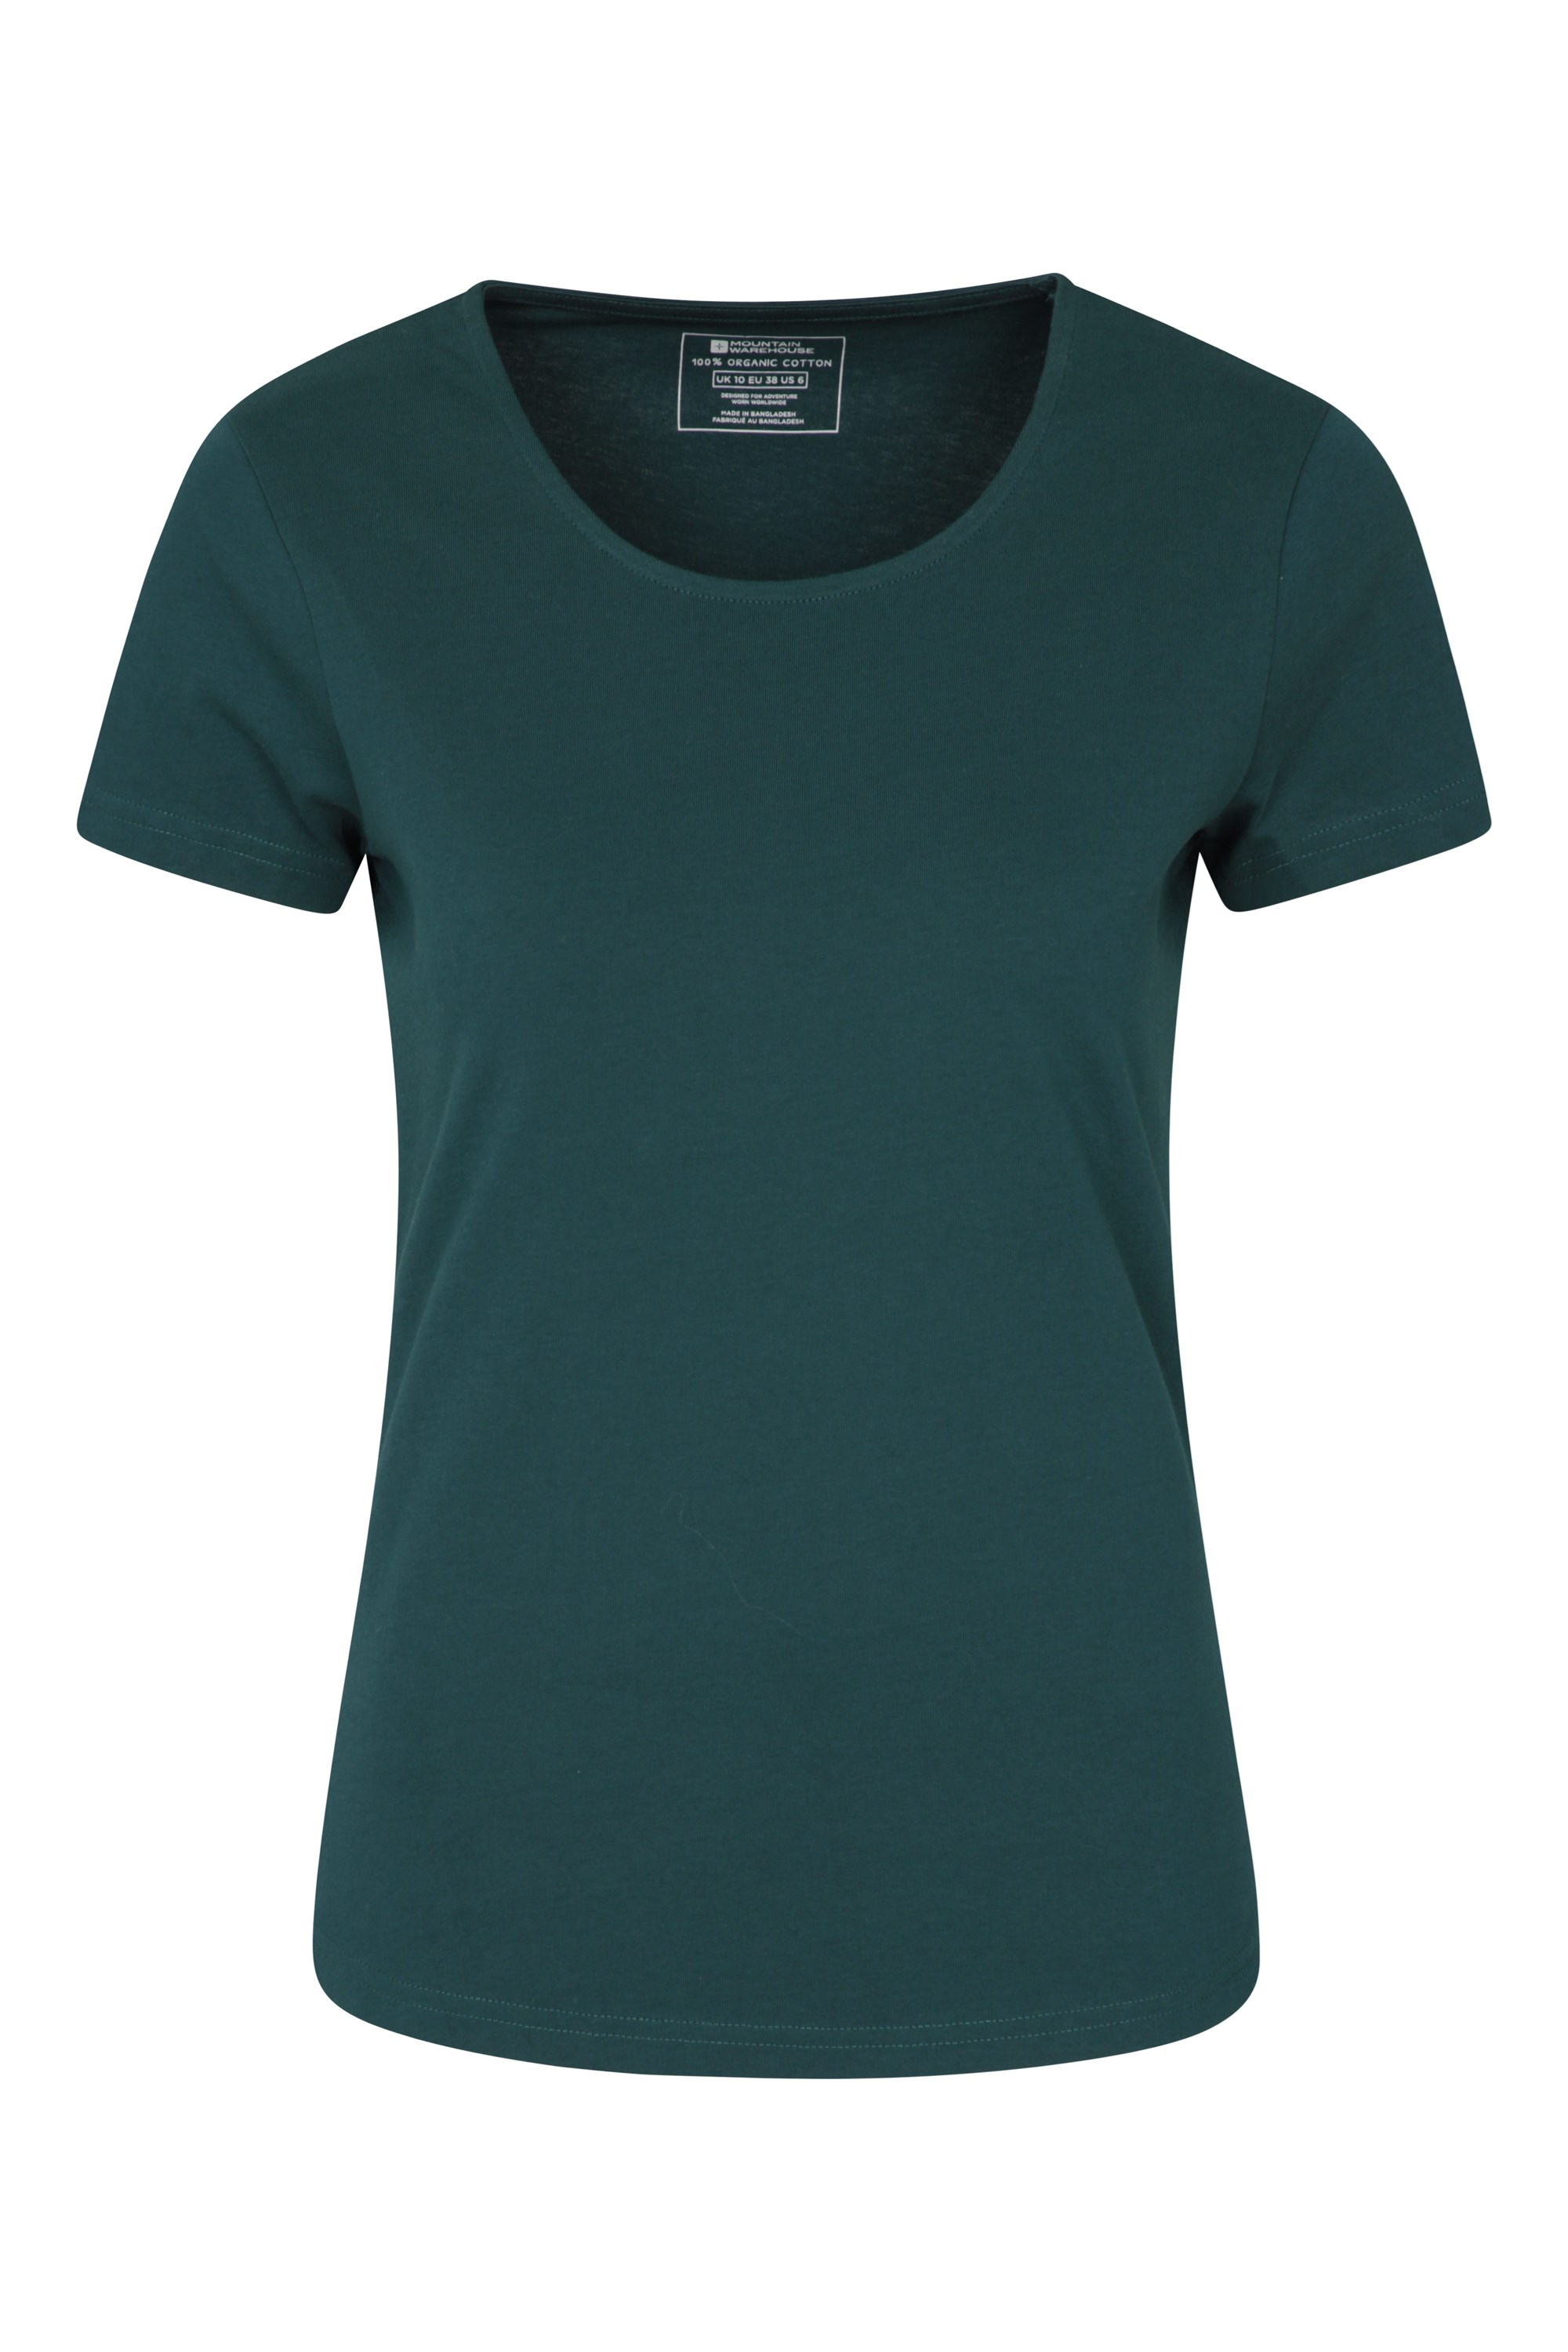 T-Shirt Organique Easy Femme - Vert